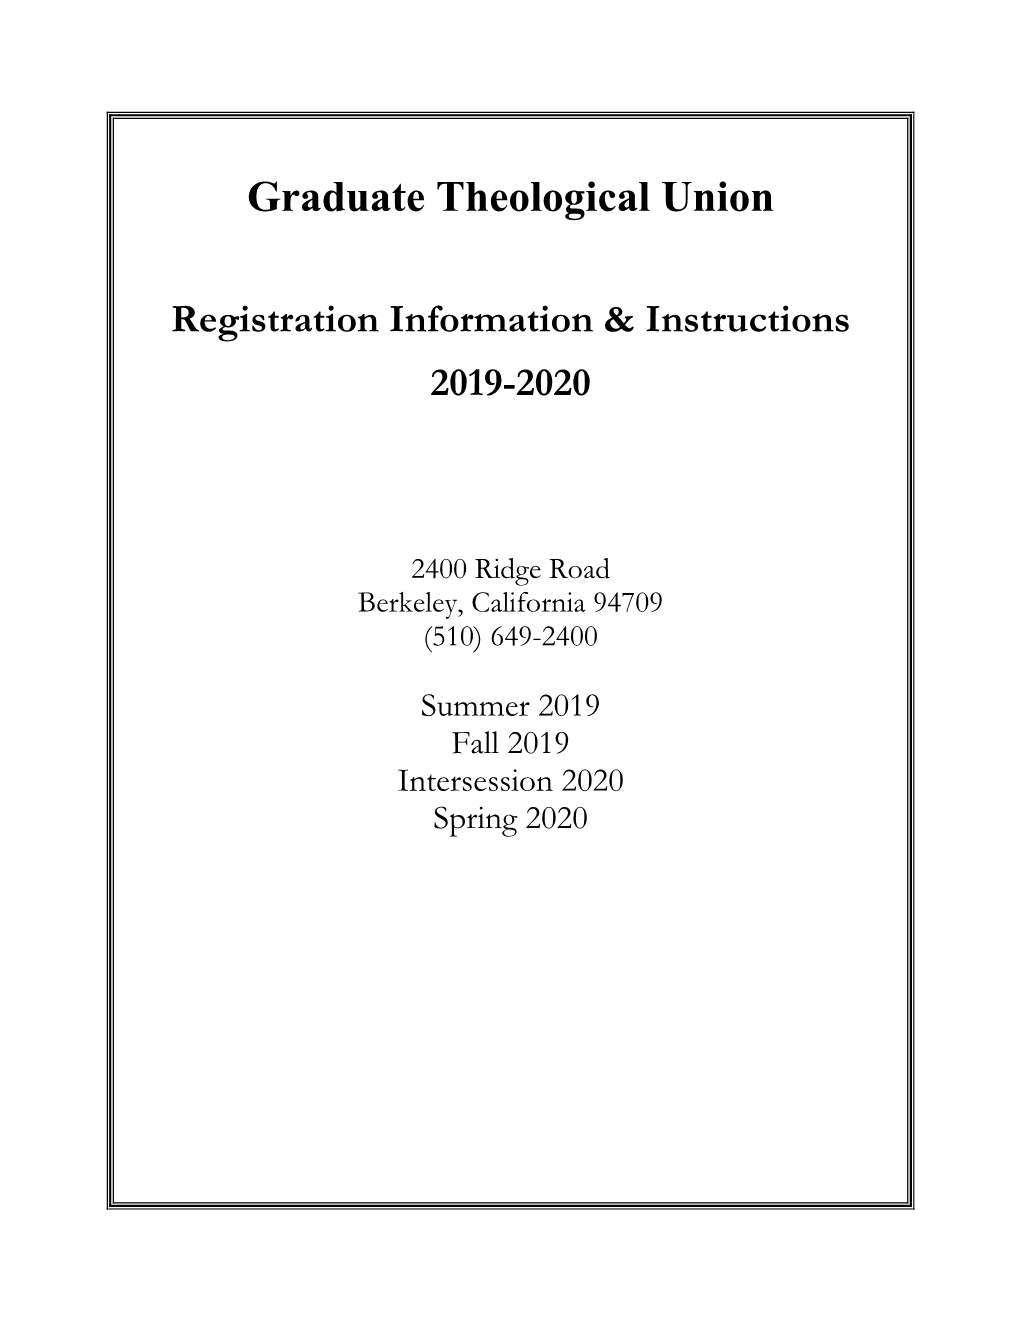 Graduate Theological Union Registration Information